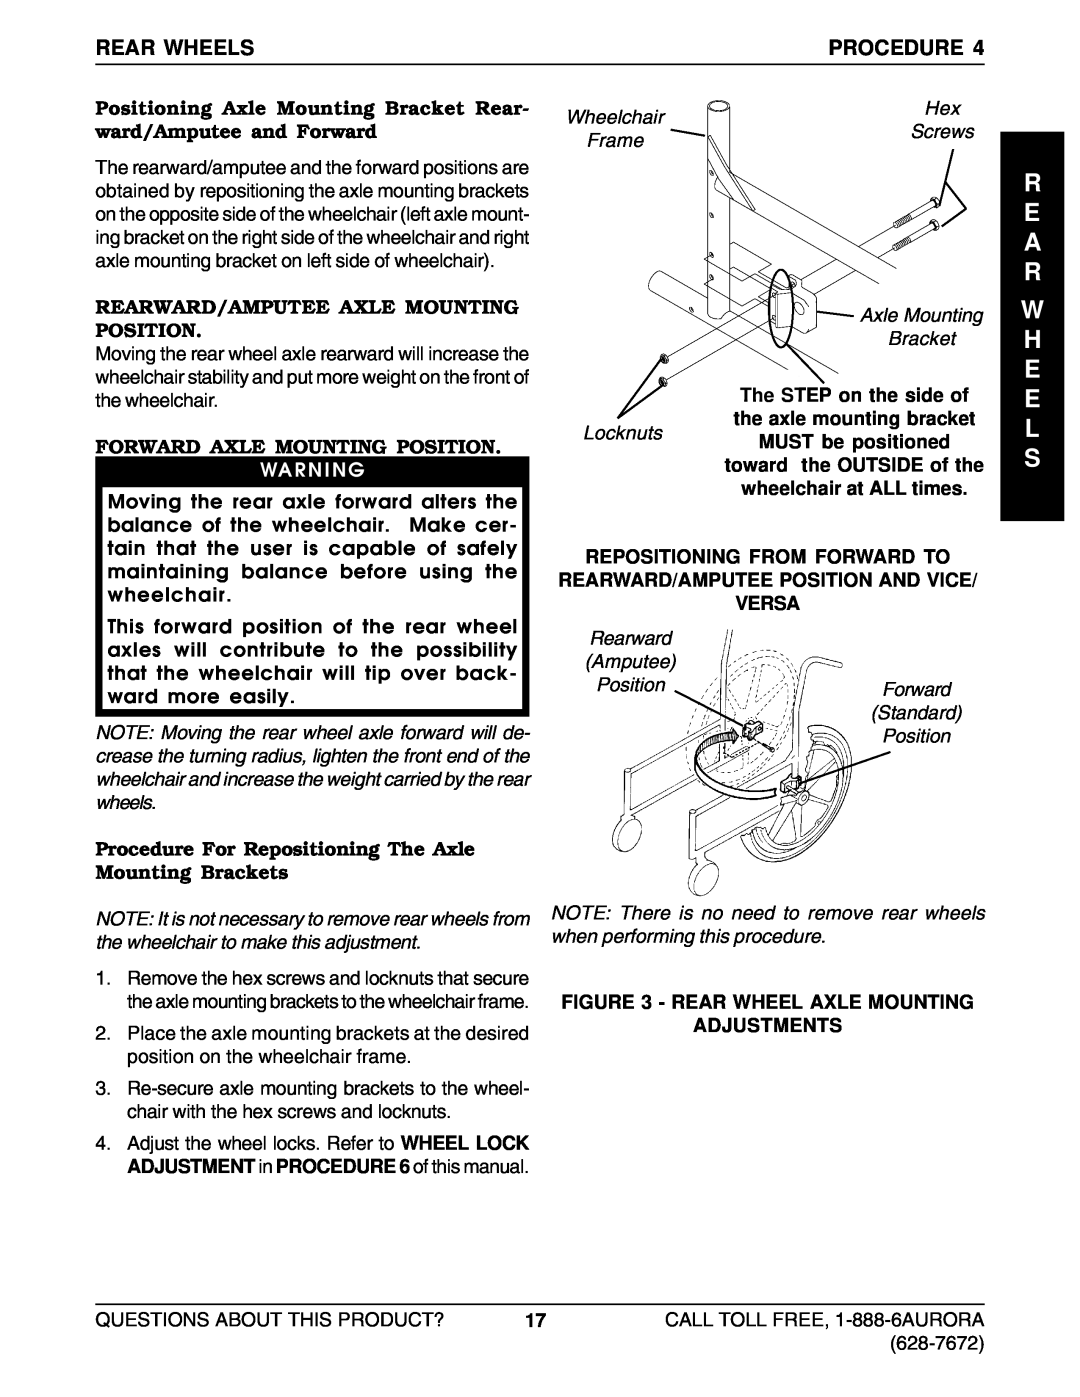 Invacare Lightweight Aluminum Wheelchair manual R E A R W H E E L S, Rear Wheels, Procedure, Forward Axle Mounting Position 